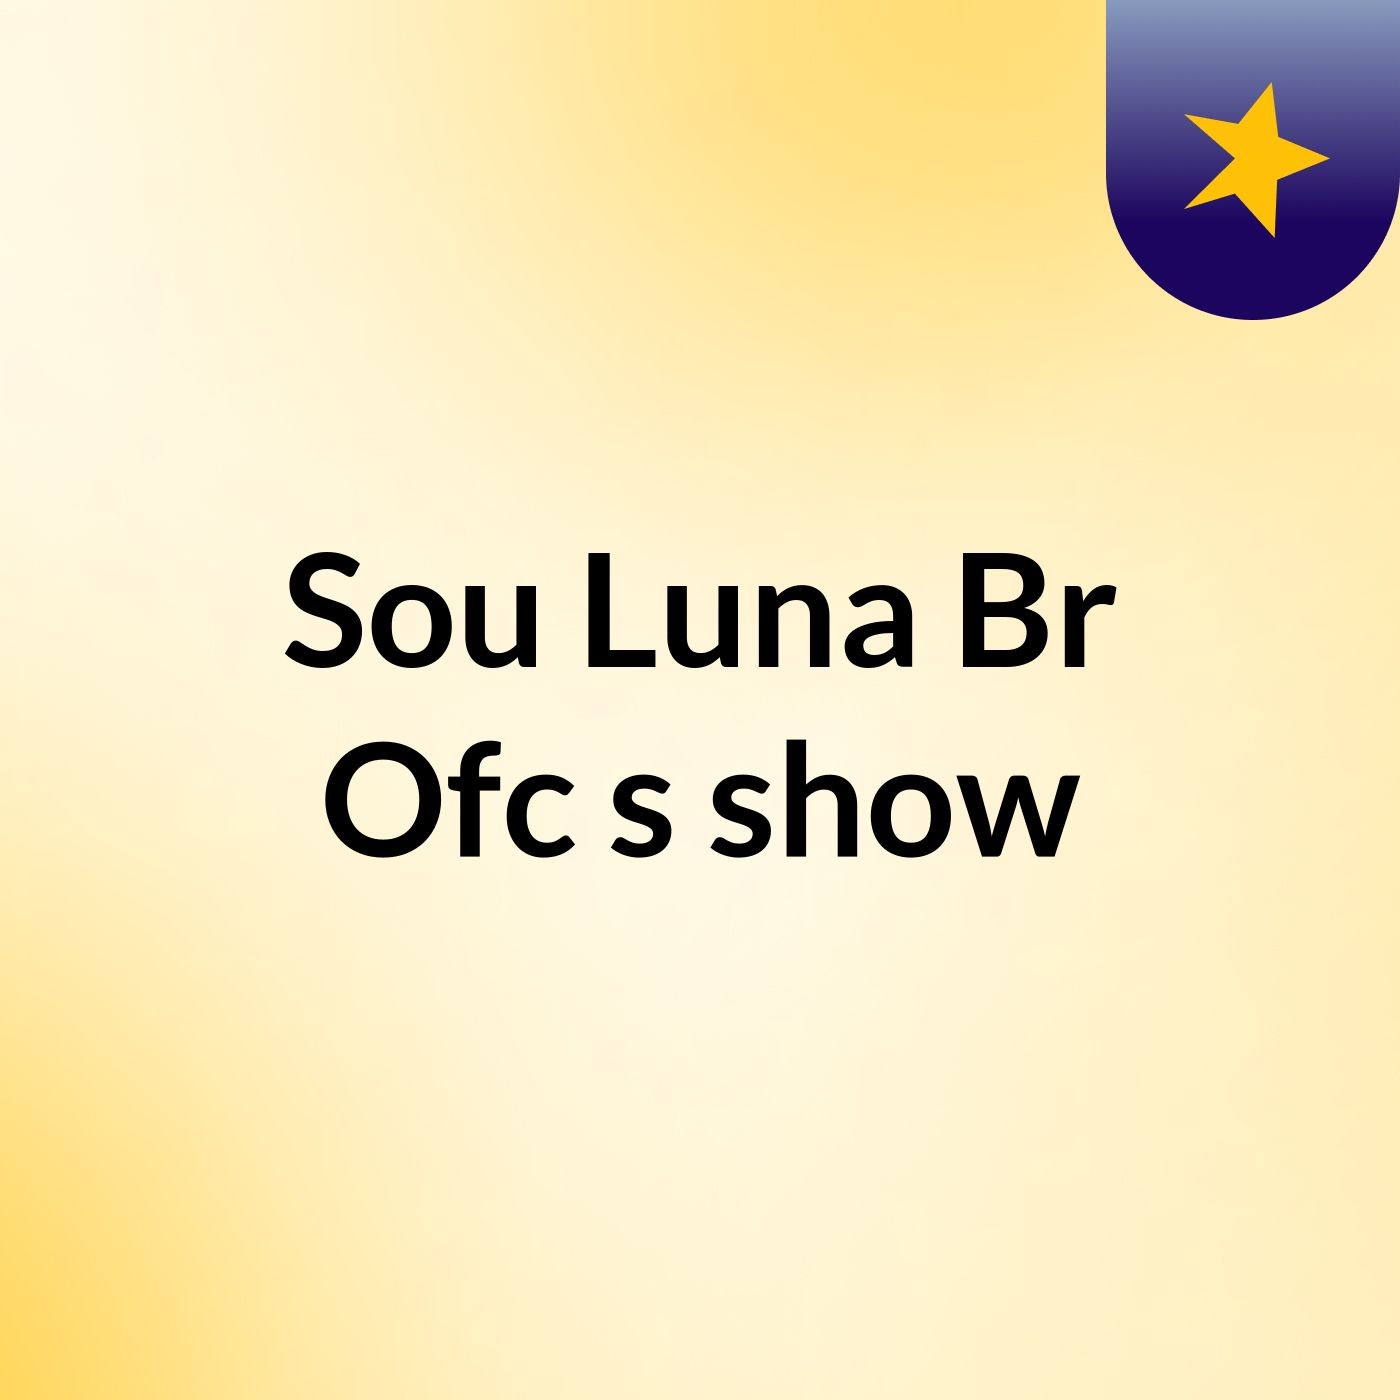 Sou Luna Br Ofc's show